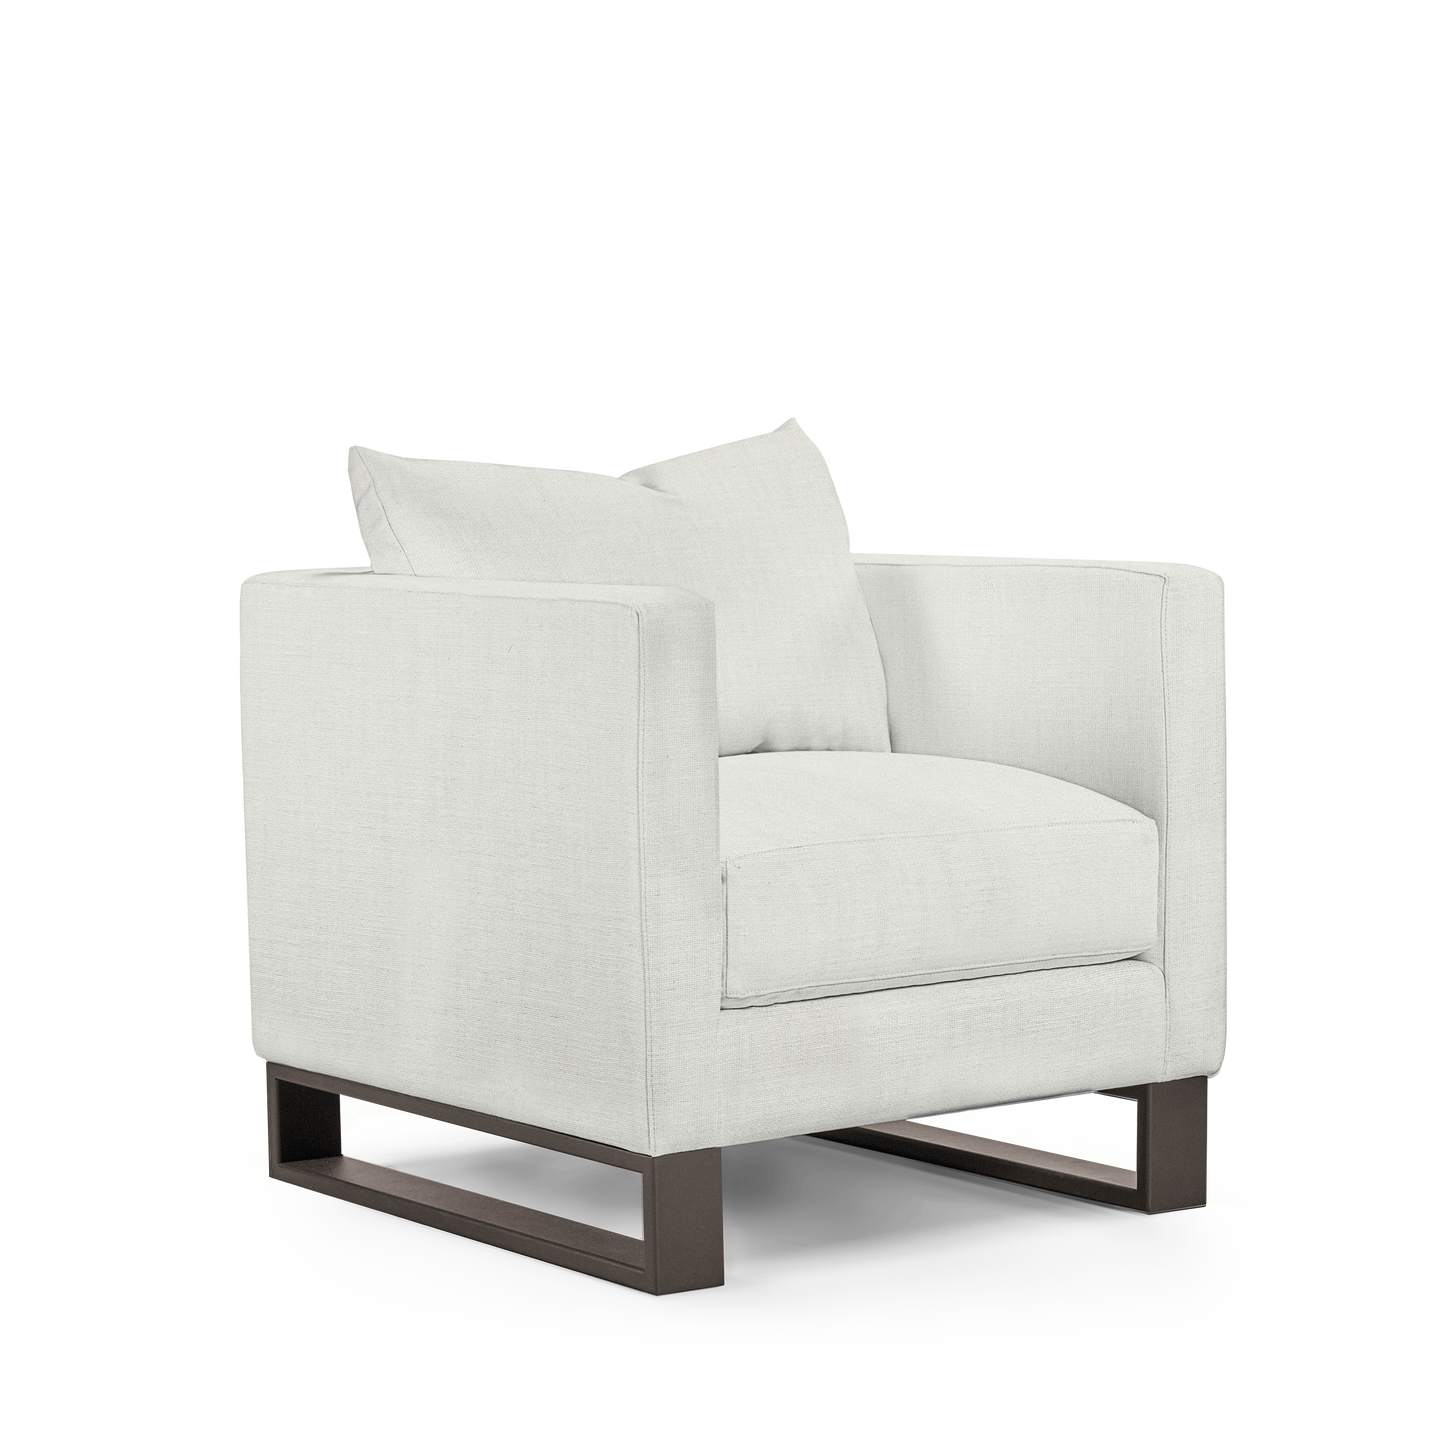 Atlin armchair with Rocco white textile with moka legs 